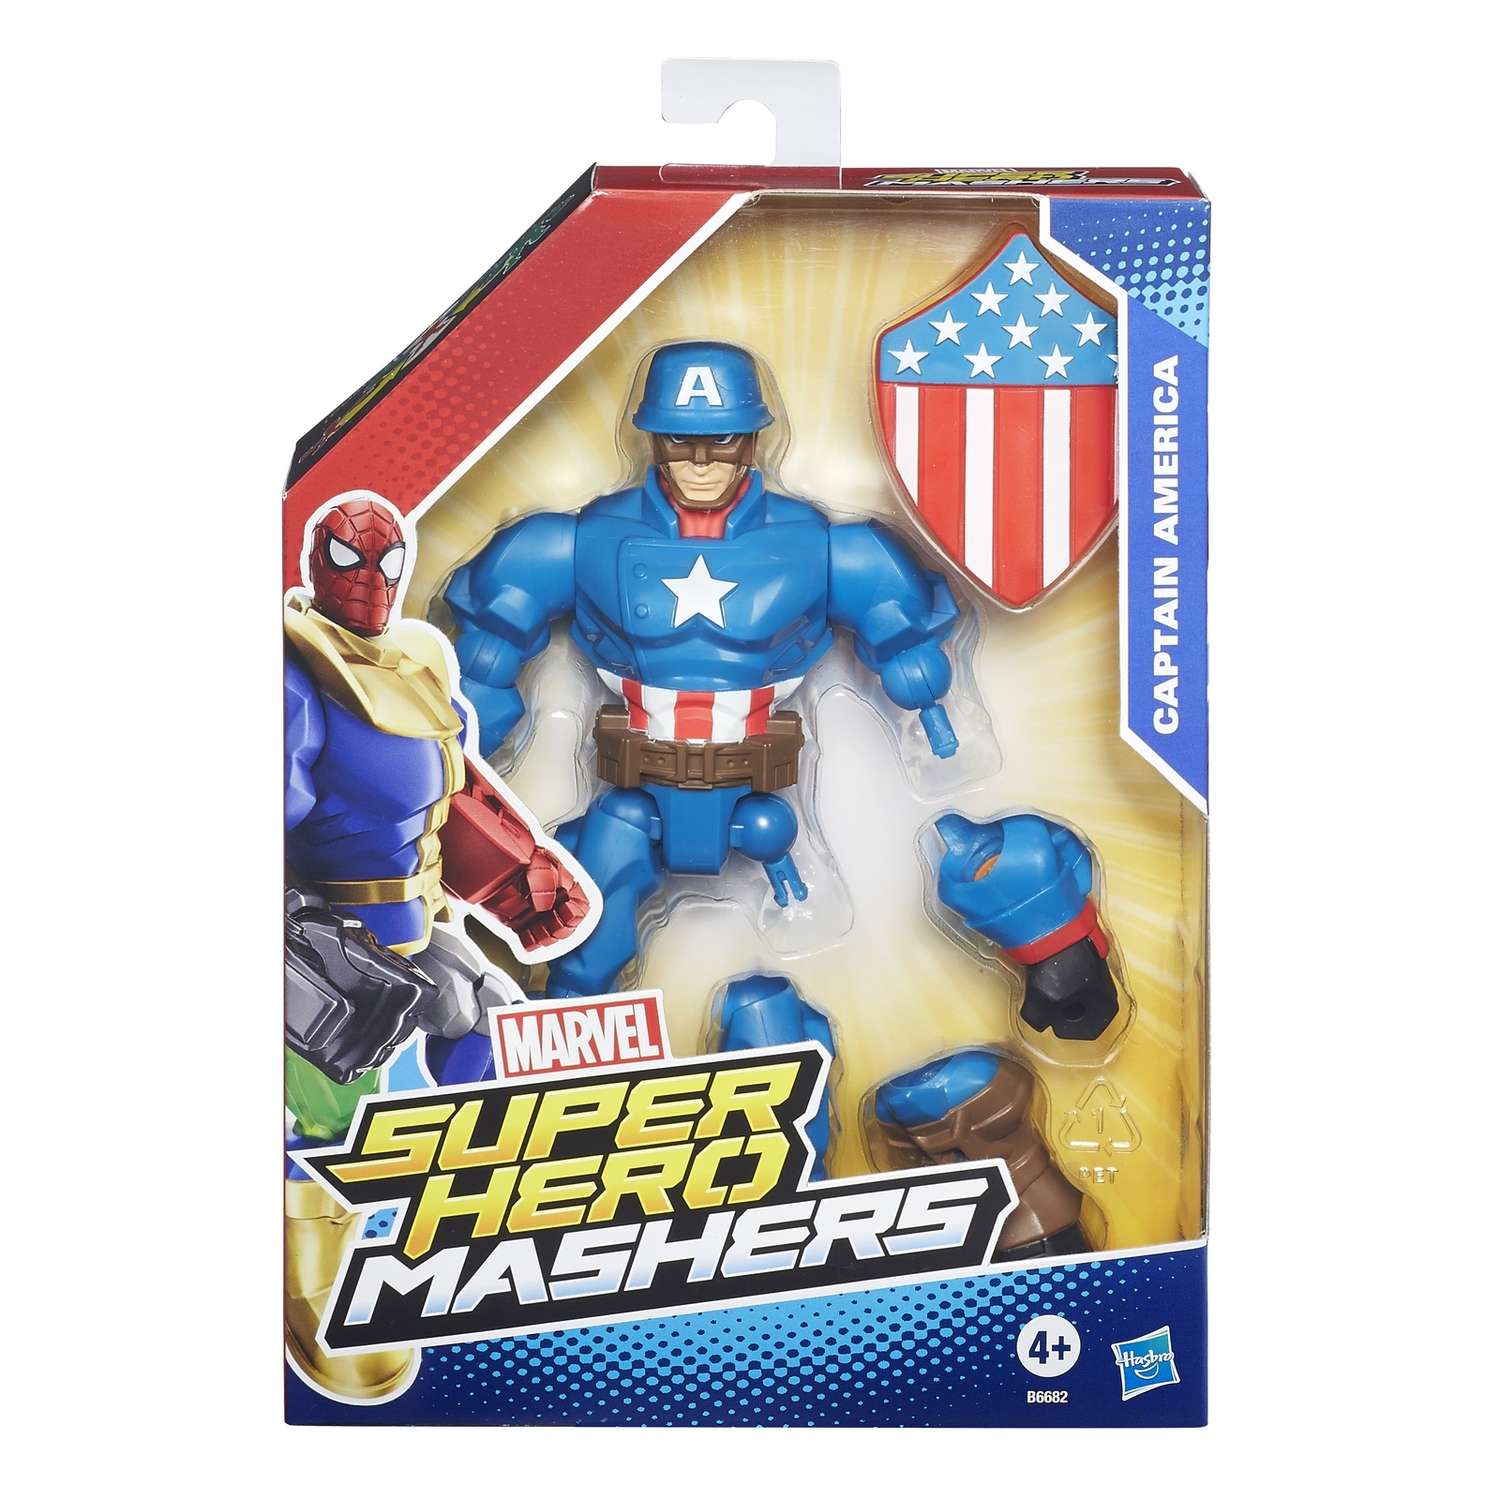 Разборные фигурки HEROMASHERS Super Hero Mashers в ассортименте - фото 49